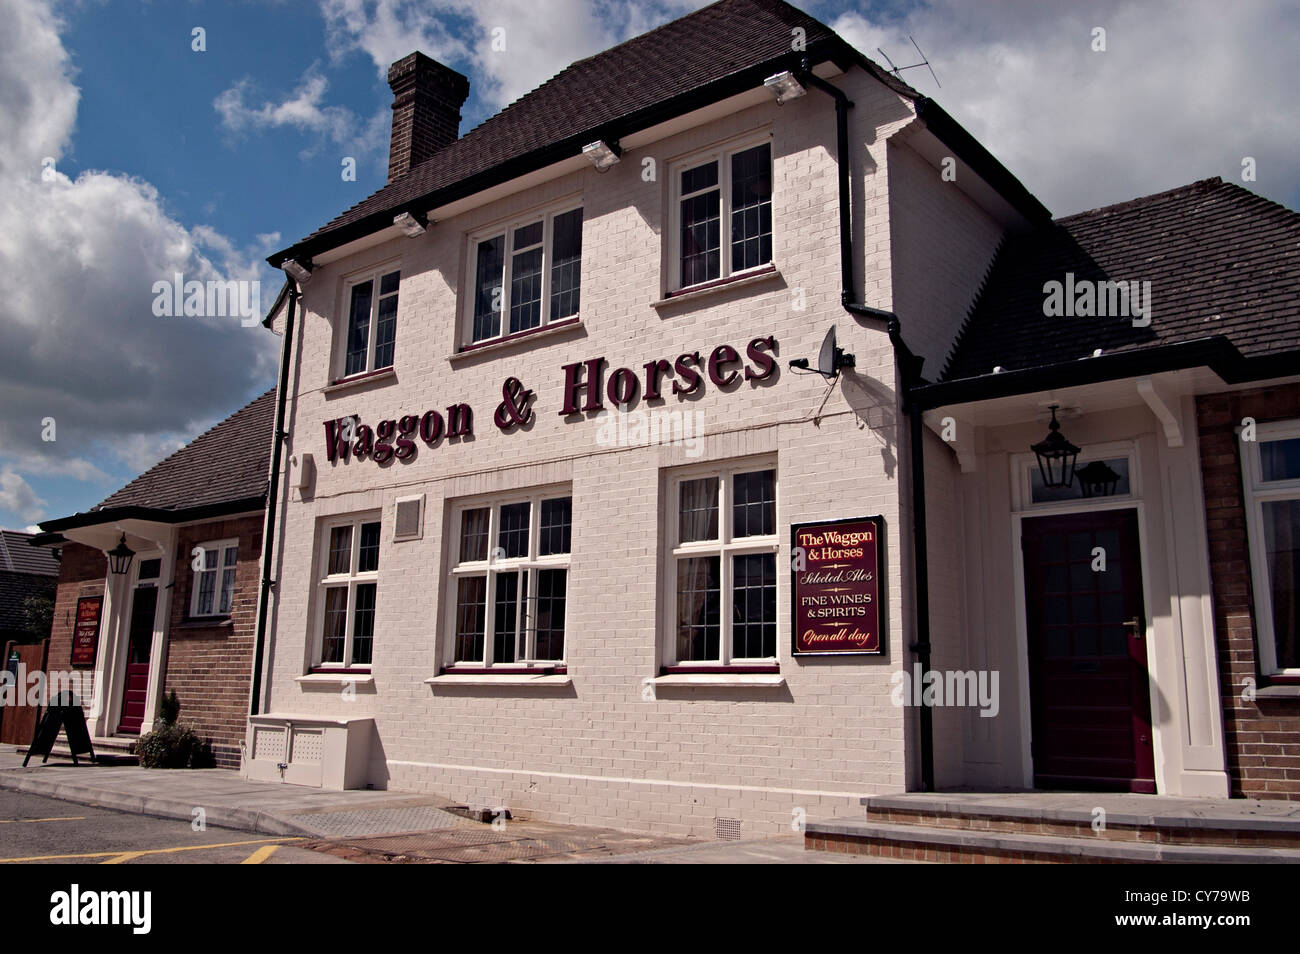 wagon and horses pub Bishops Stortford Stock Photo